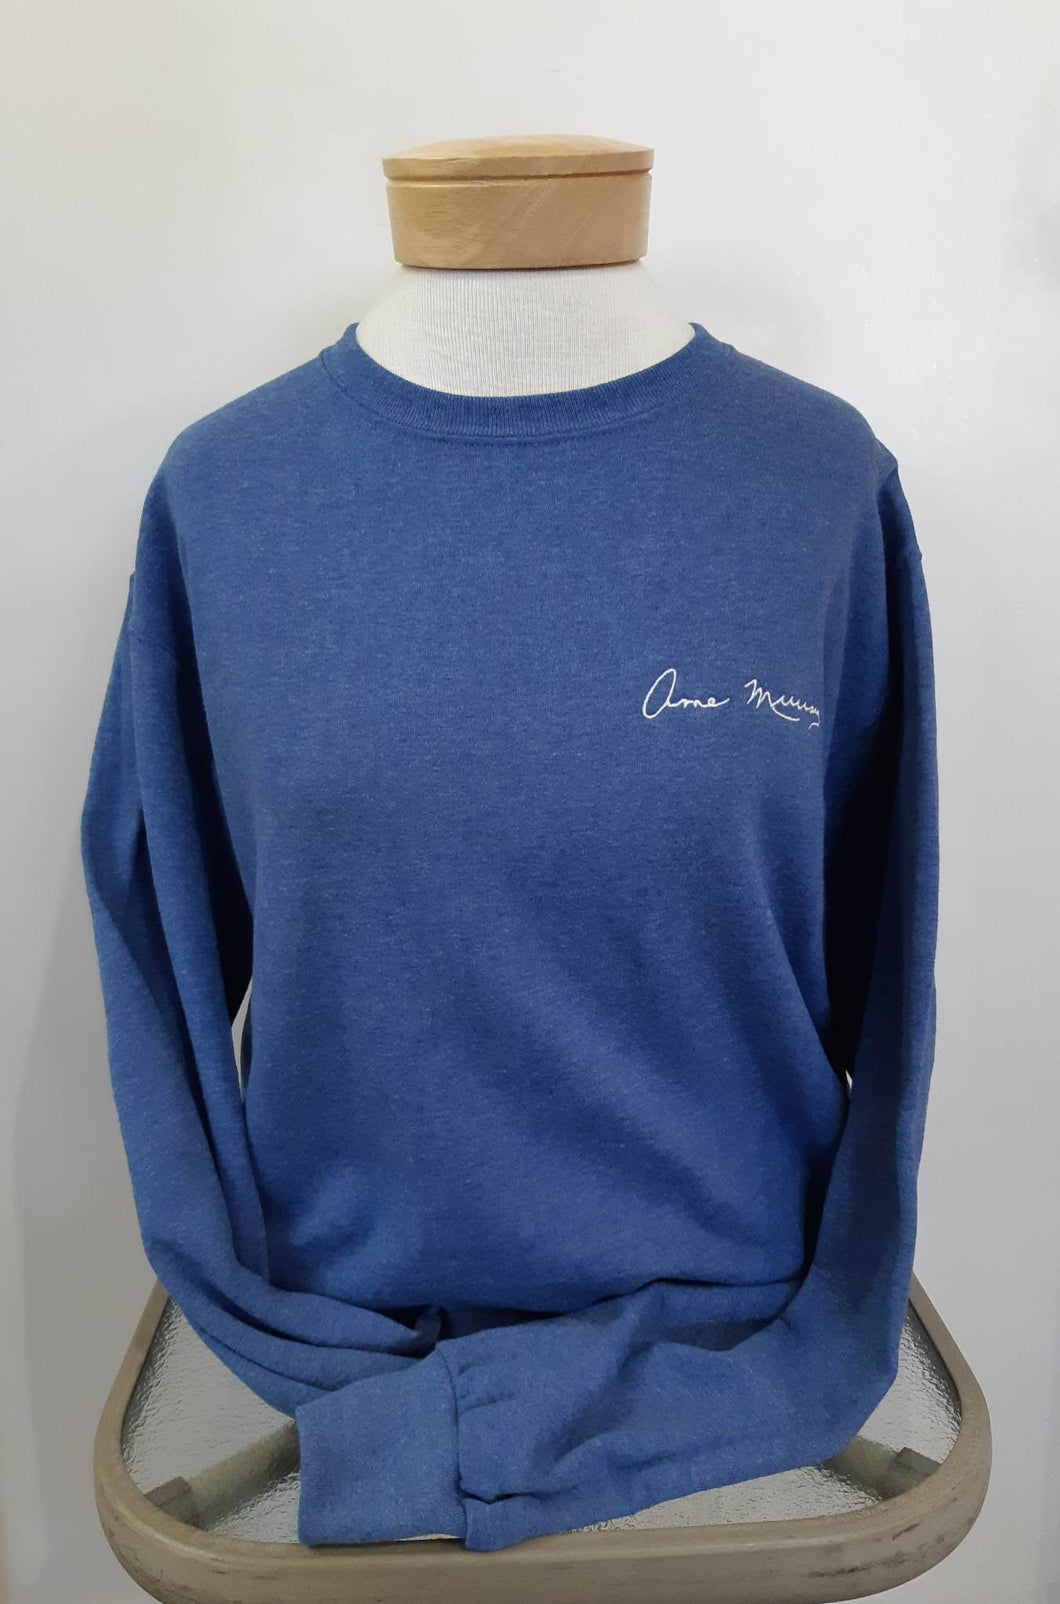 Anne Murray Signature Crewneck Sweater